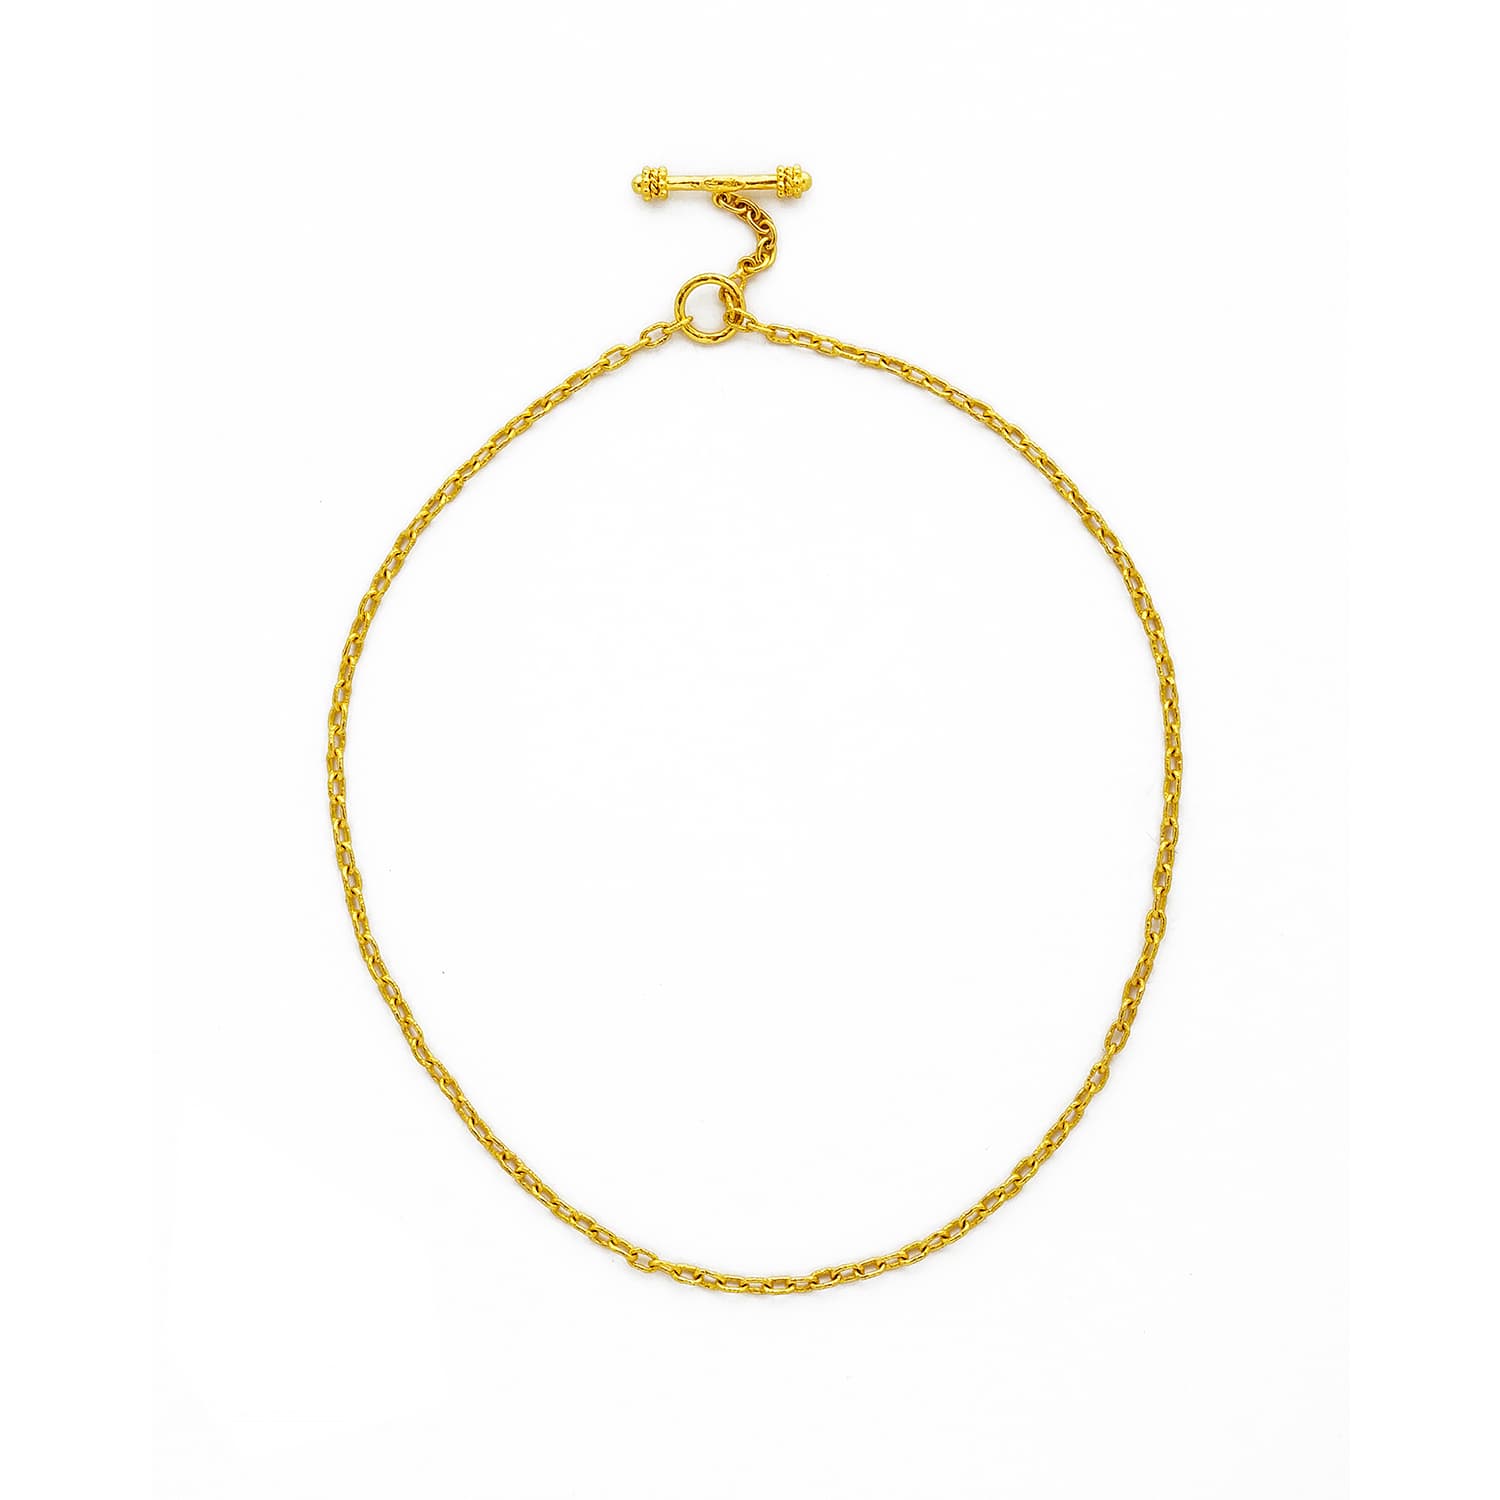 Elizabeth Locke Very Fine Gold Chain Necklace - 17 inches  0